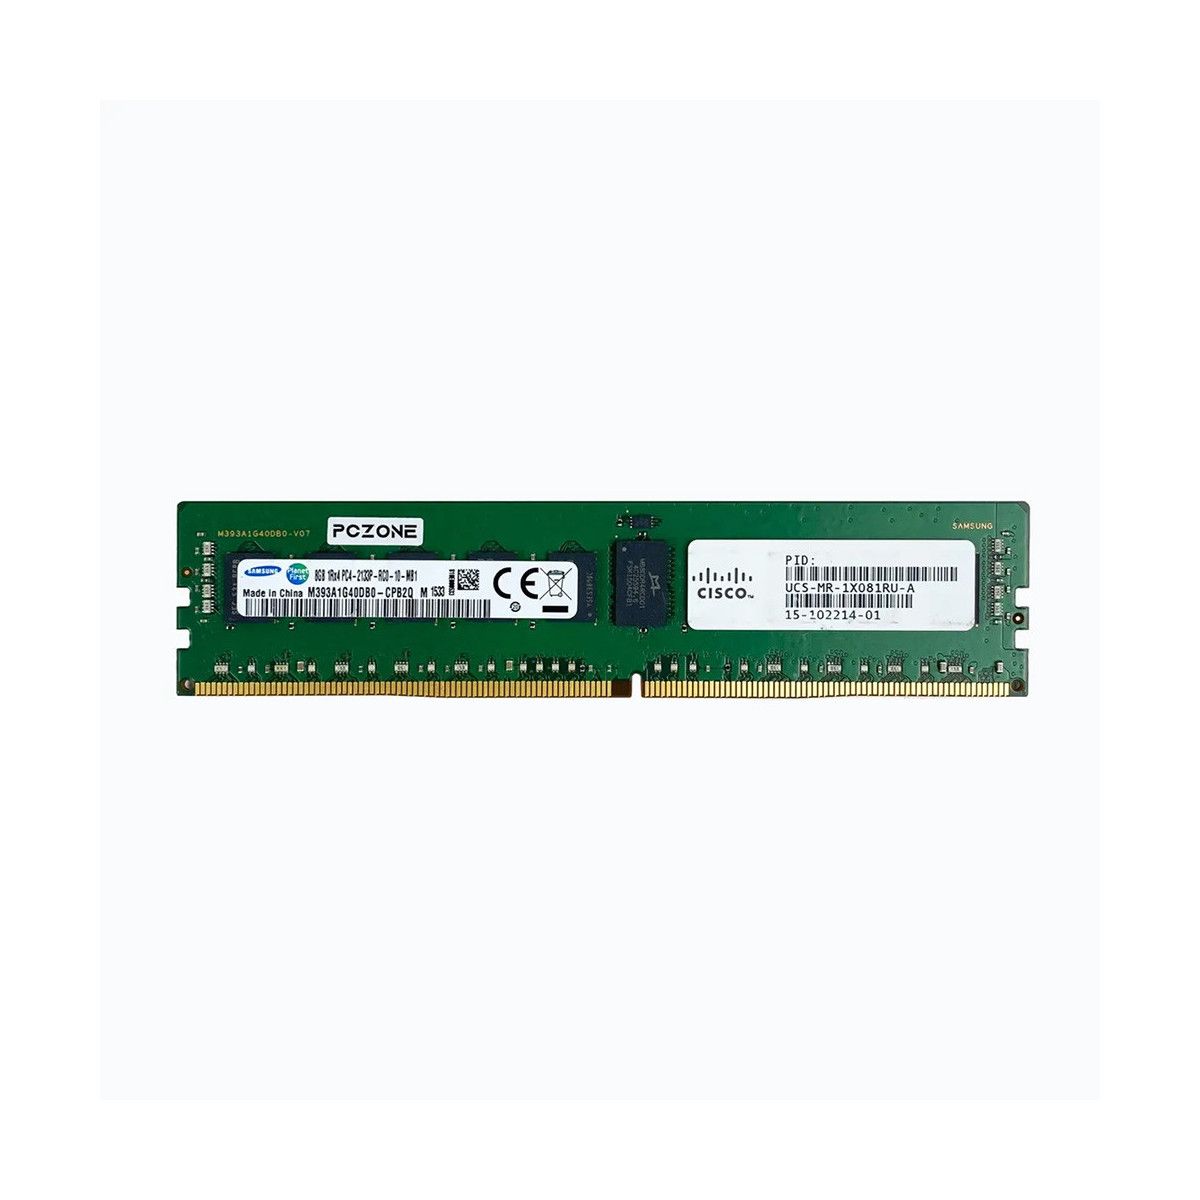 7110308-MS - Memstar 1x 8GB DDR4-2133 RDIMM PC4-17000P-R - Mem-Star OEM Memoria compatible 1 - Memstar 